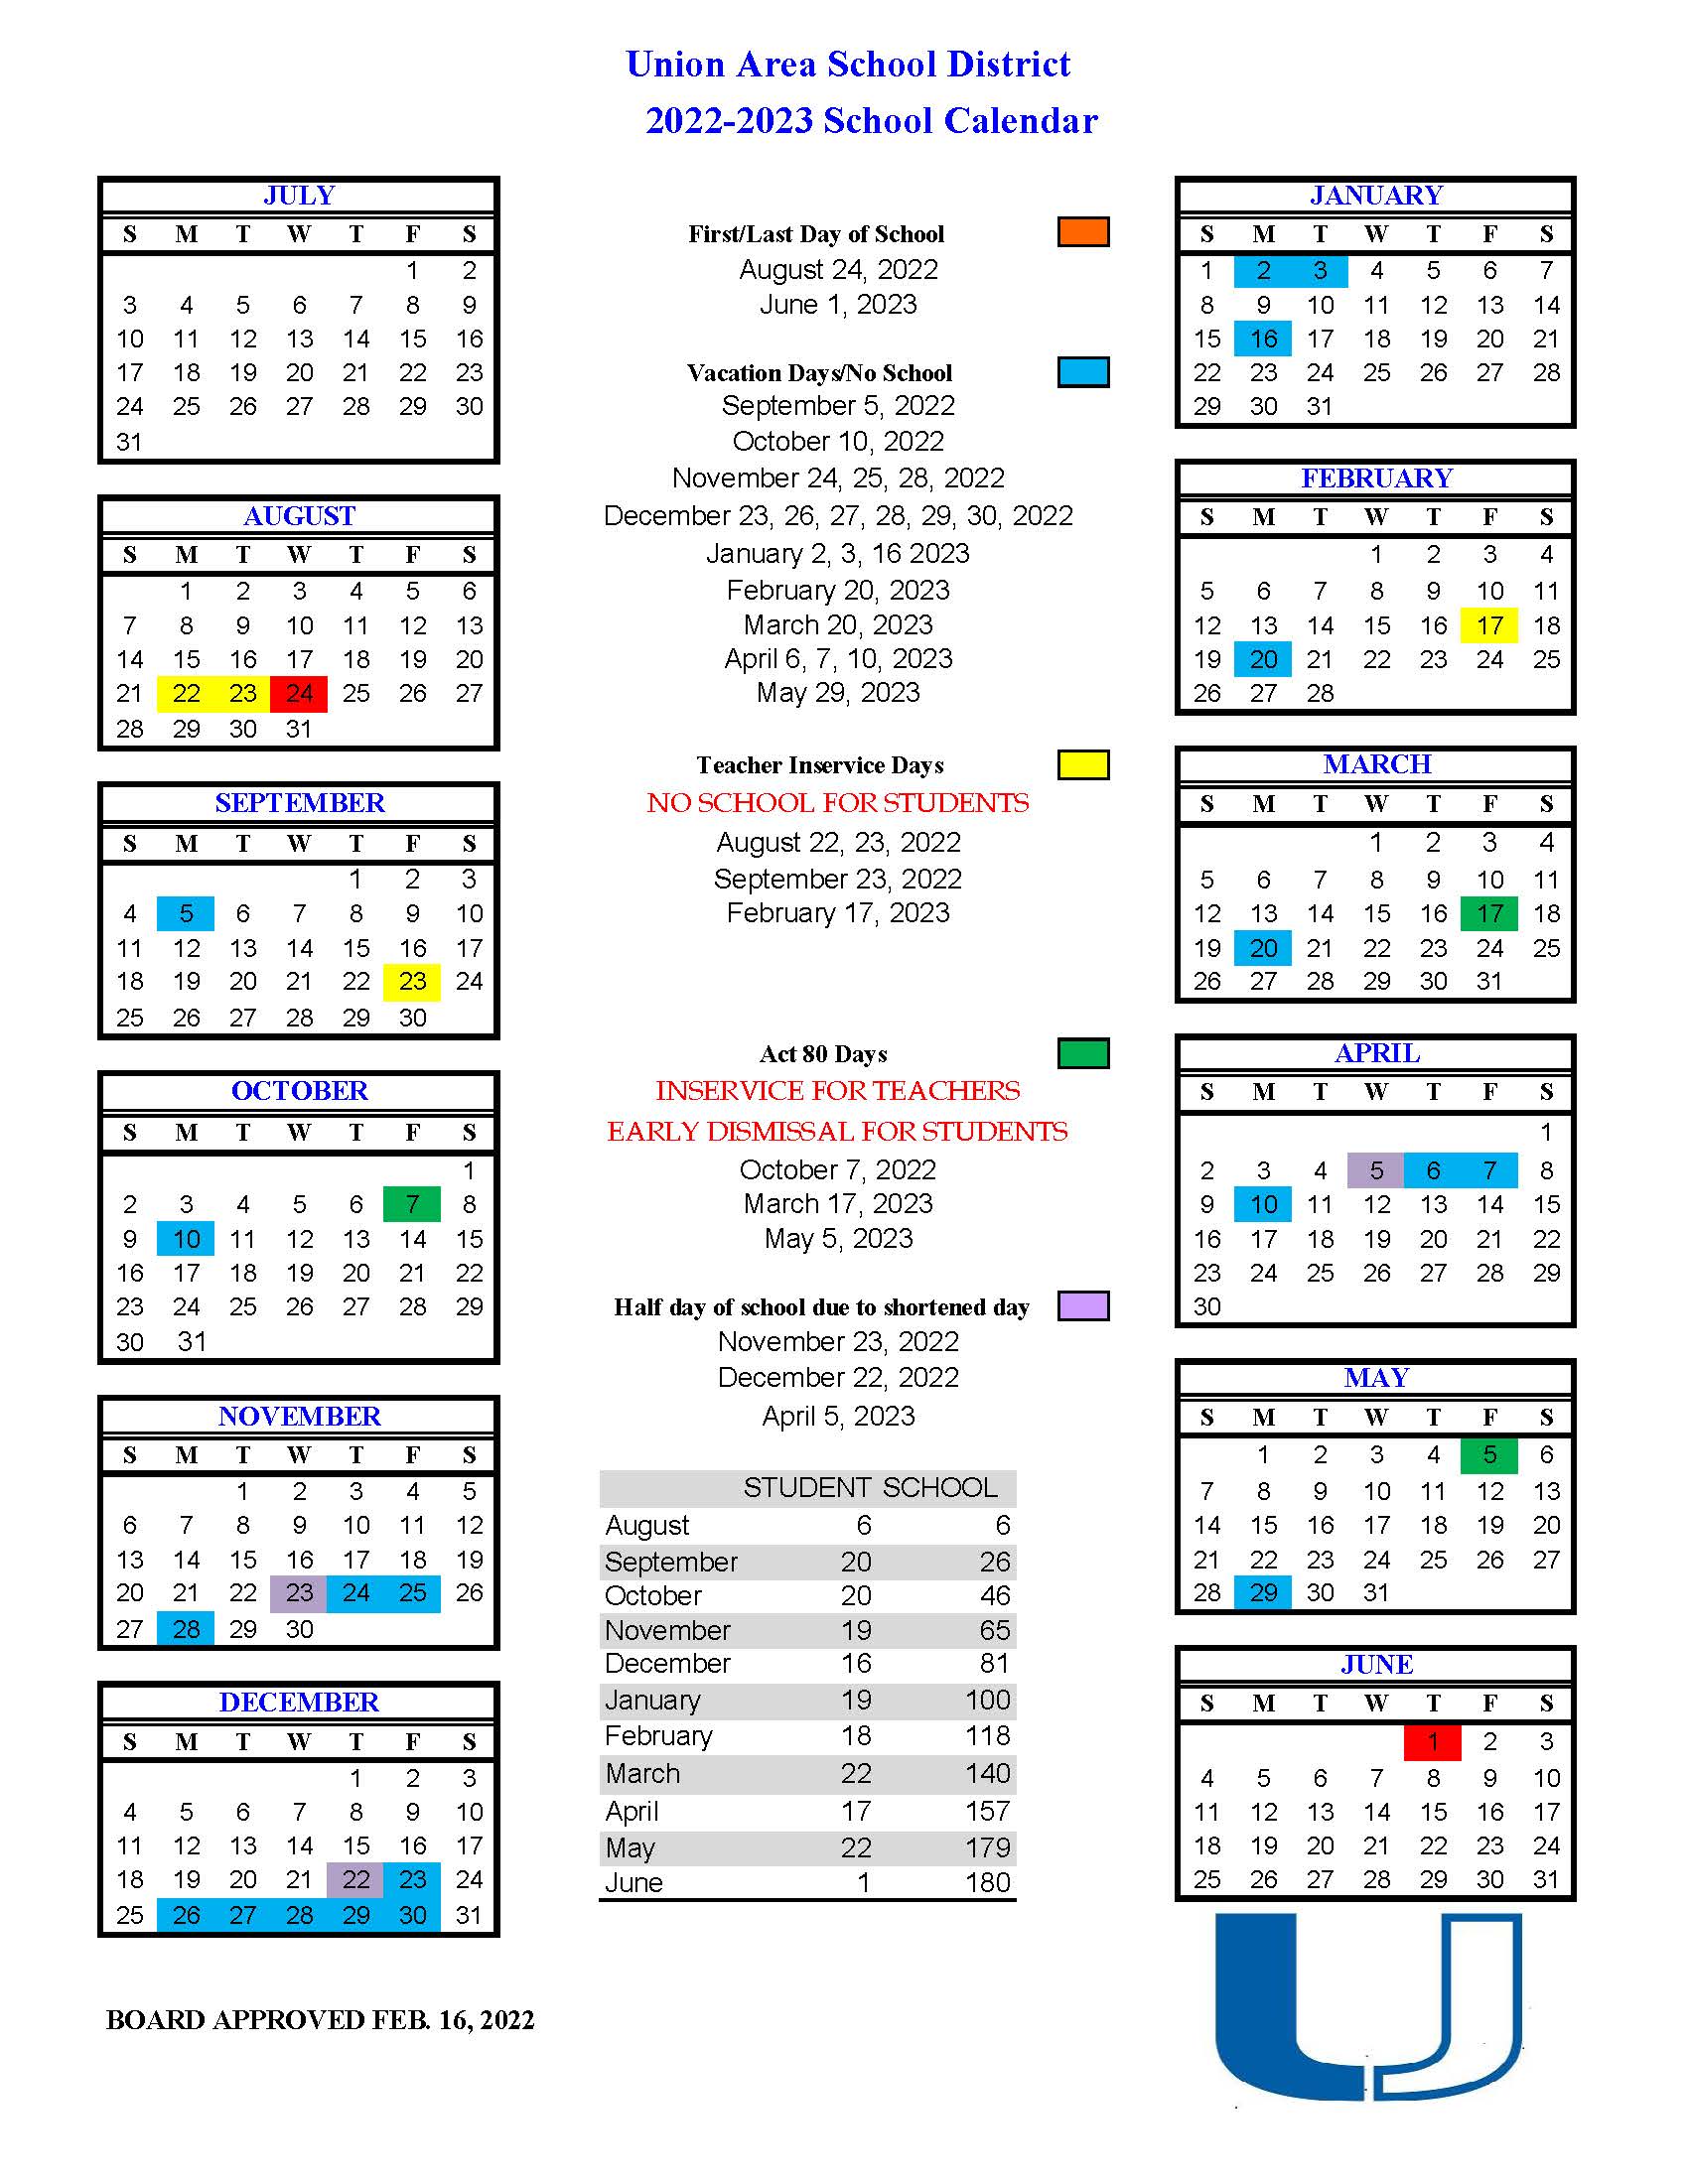 Union Area School District Calendar 20242025 MyCOLLEGEPOINTS